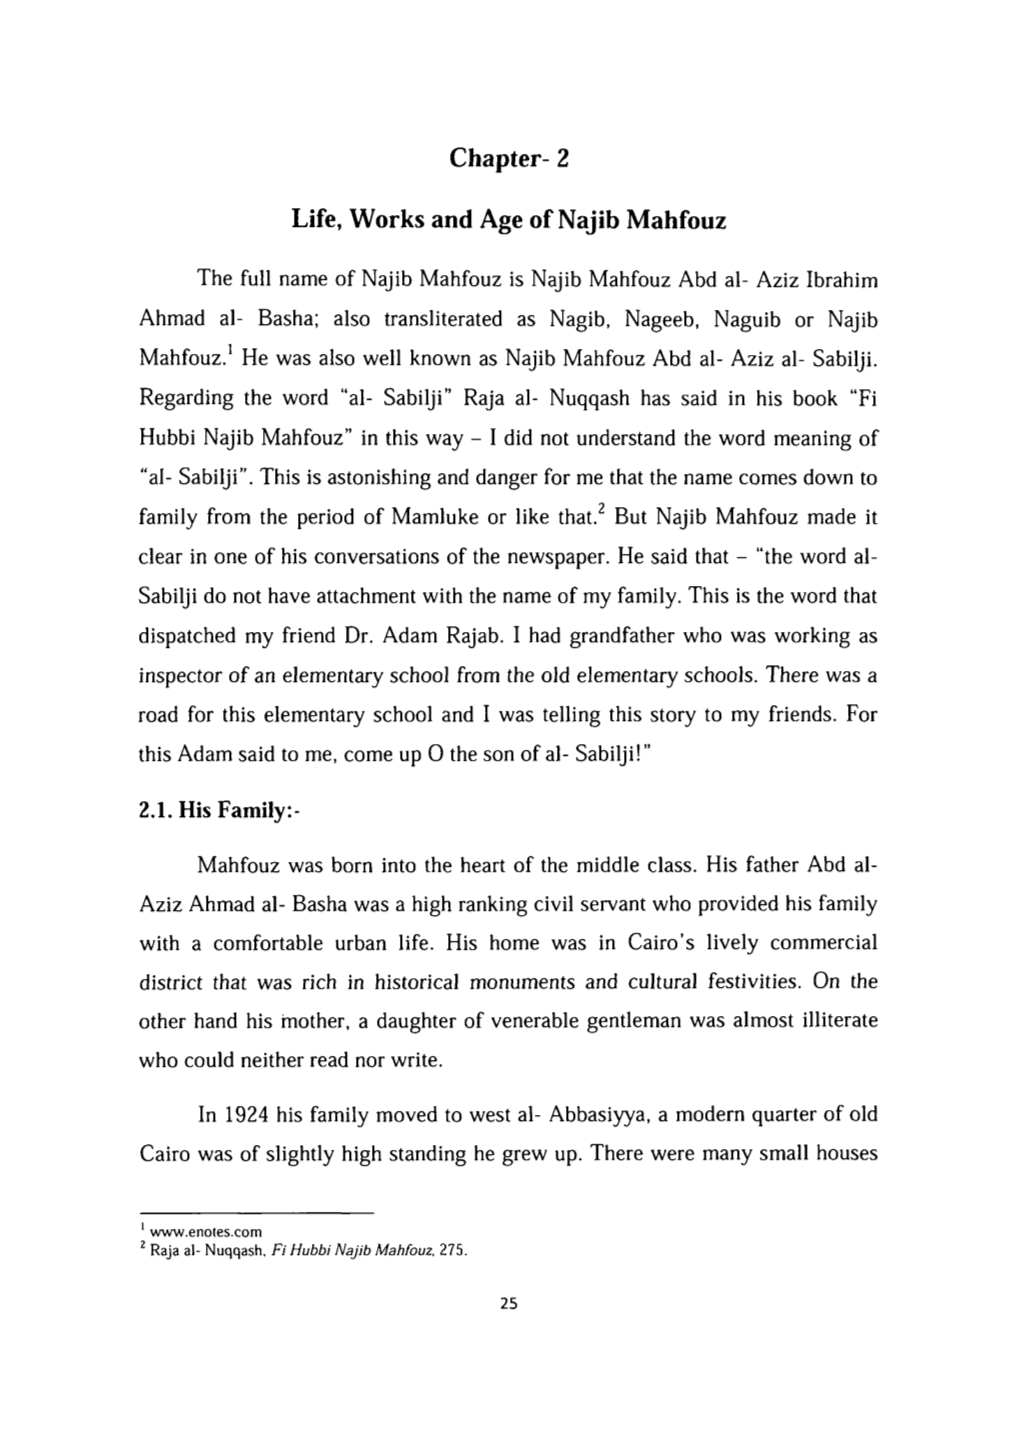 Chapter- 2 Life, Works and Age of Najib Mahfouz